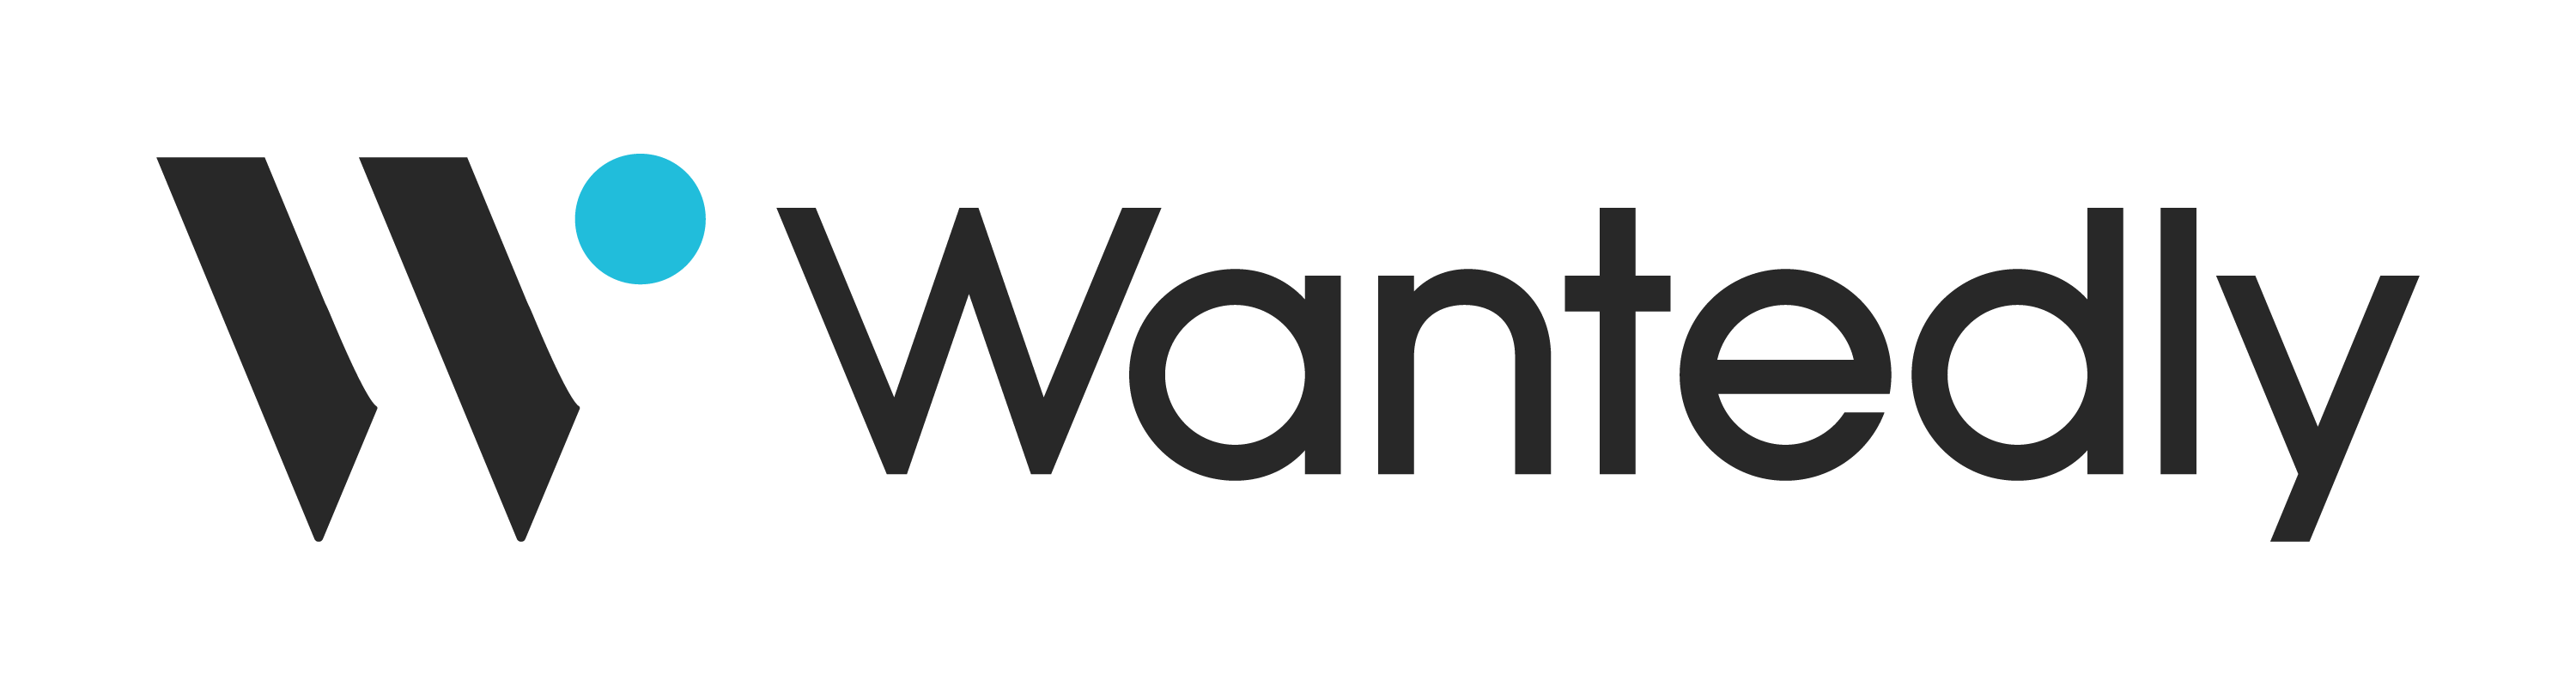 wantedly_Logo